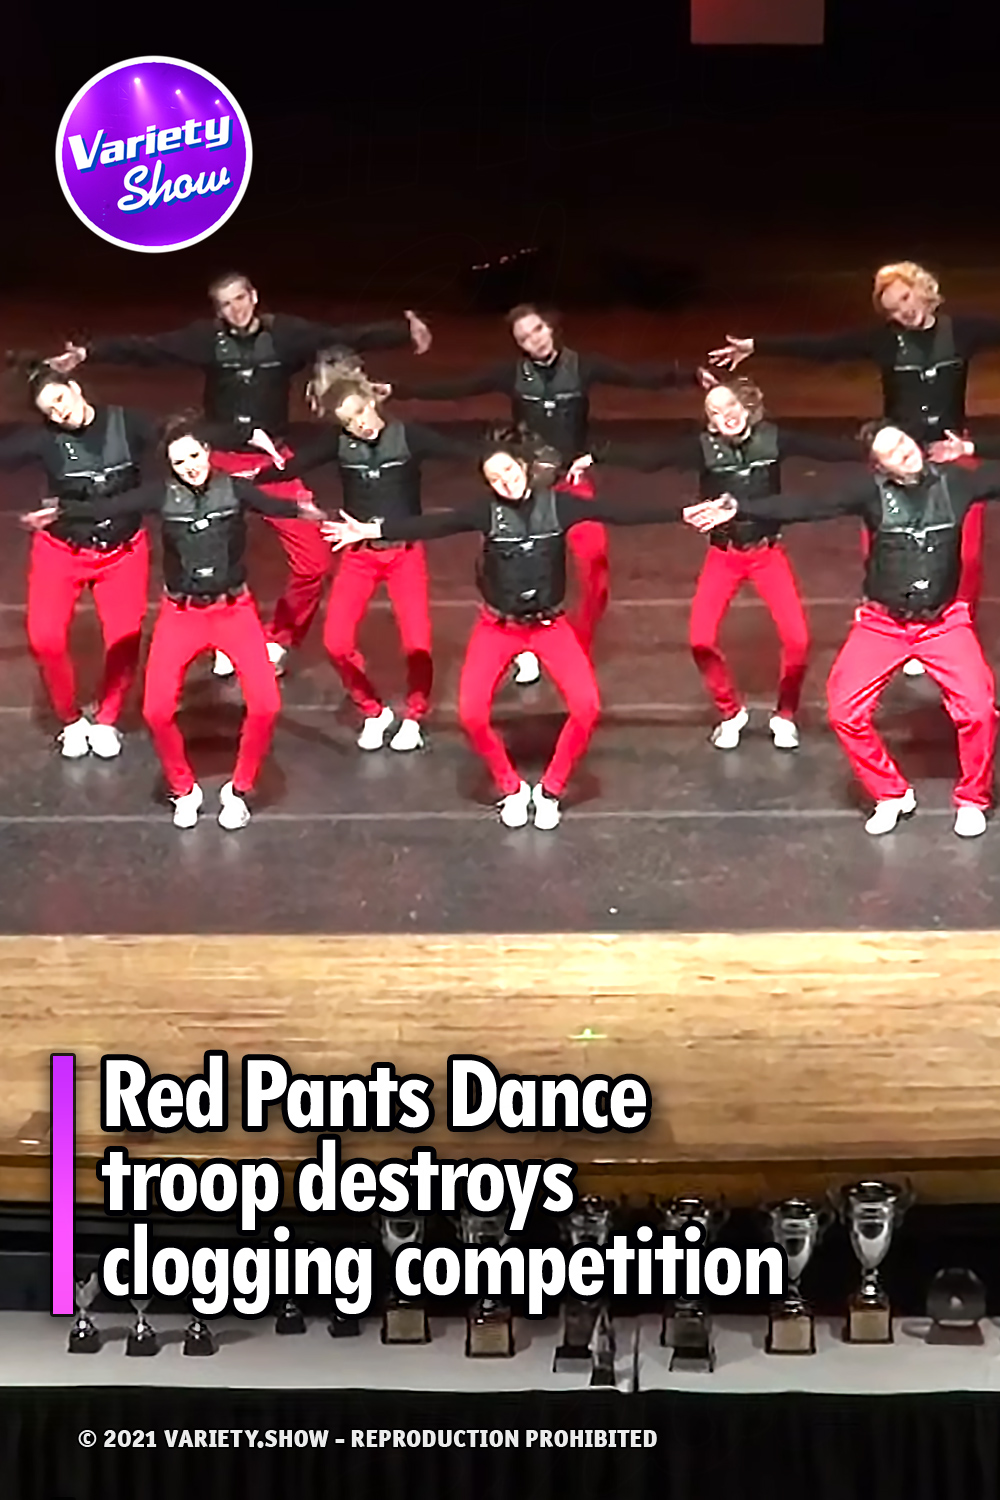 Red Pants Dance troop destroys clogging competition